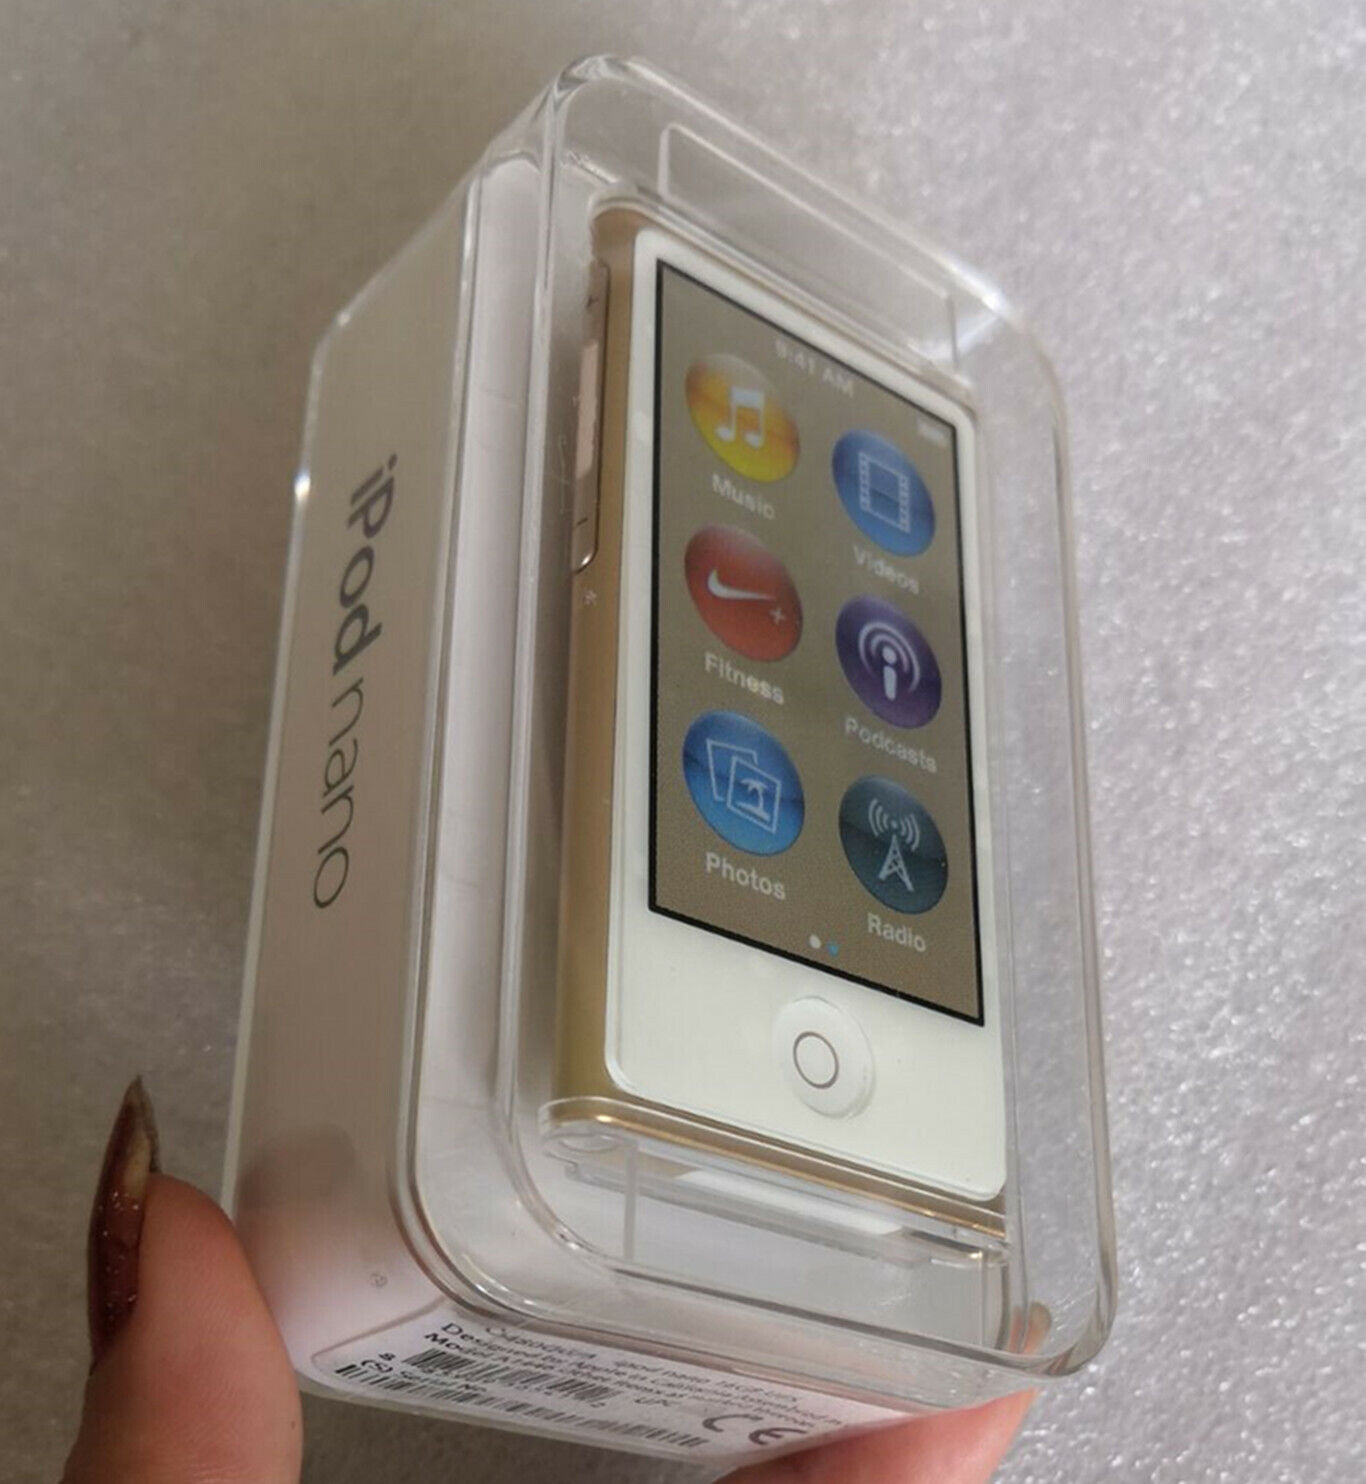 Apple iPod Nano 8th Generation Gold (16GB) (Latest Model) for sale 